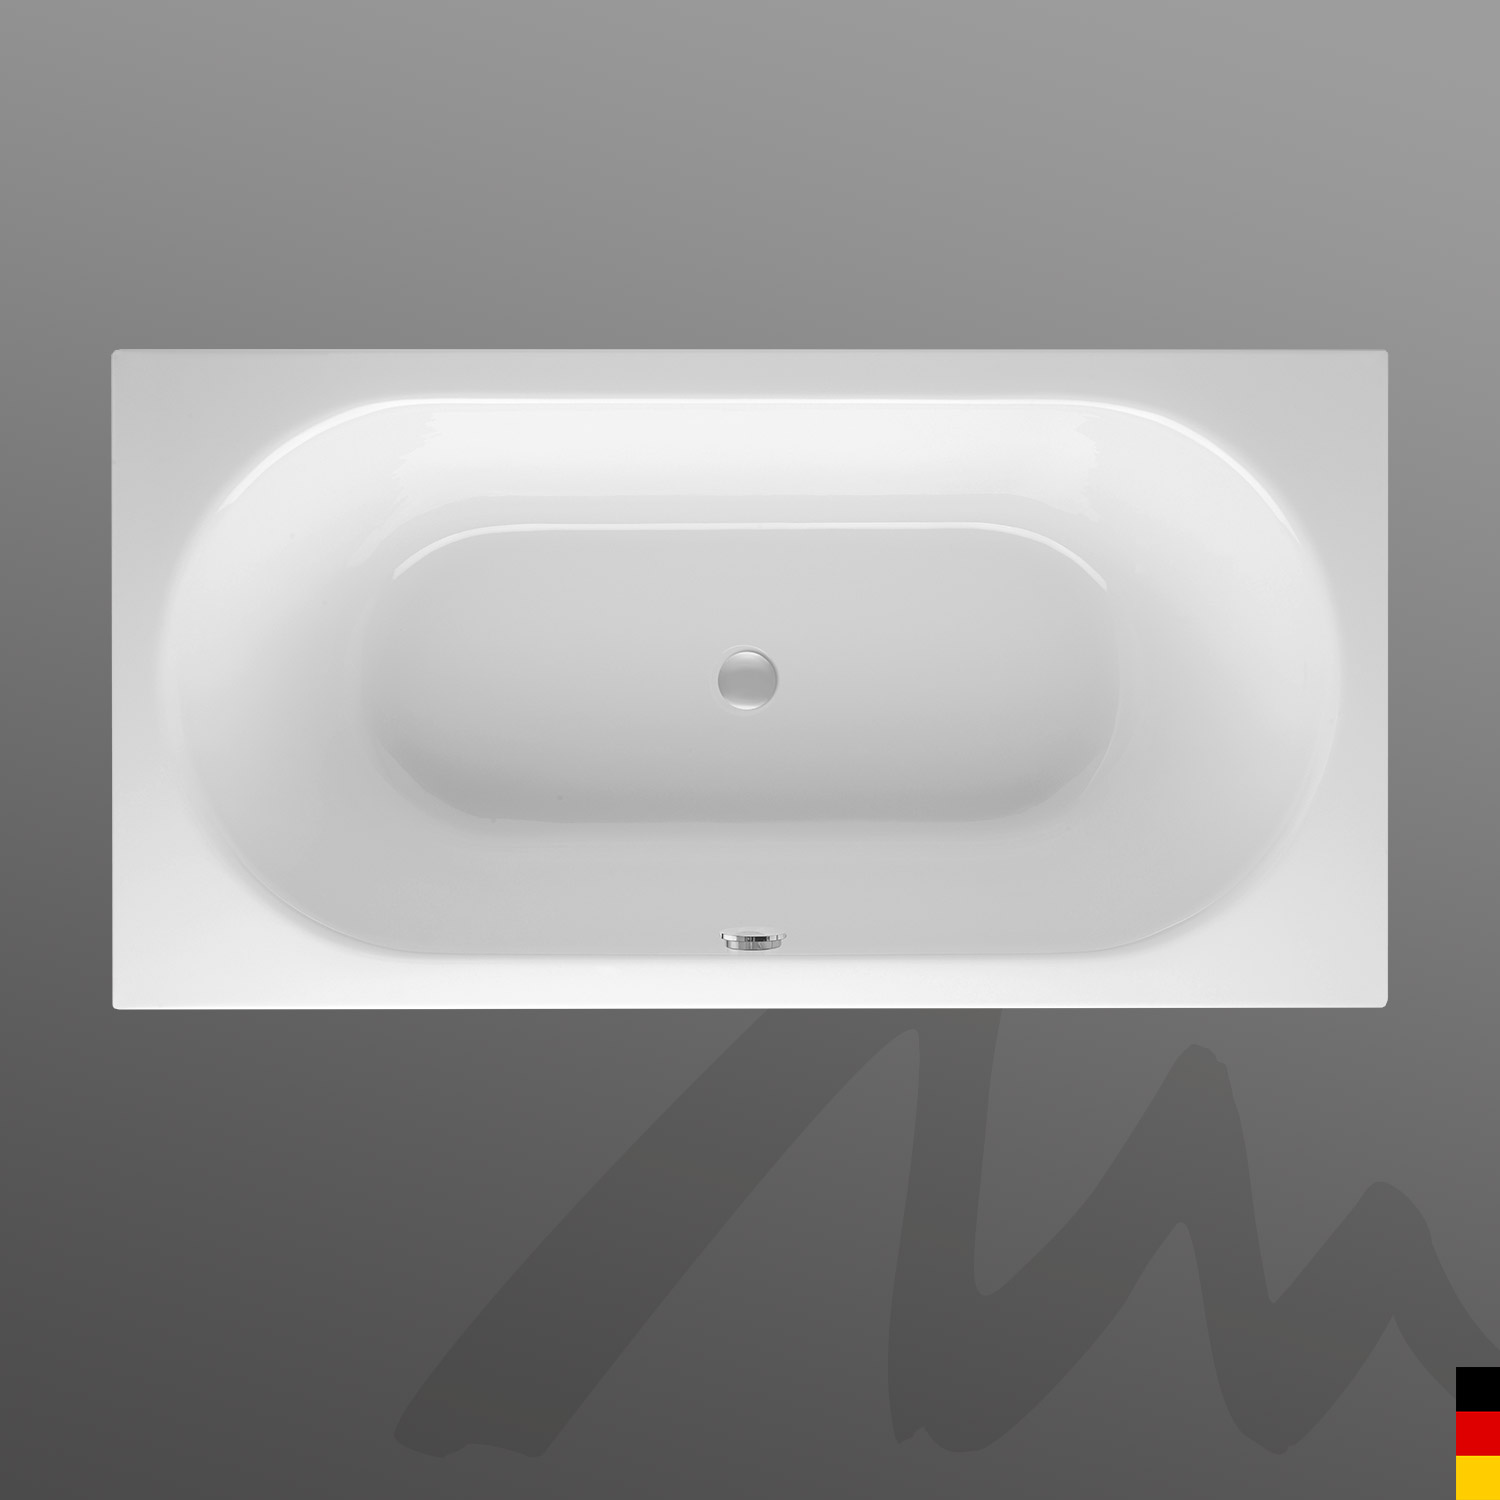 Mauersberger Badewanne Rechteck Ausana 185/95 duo  185x95x46cm  Farbe:Farbgr.3